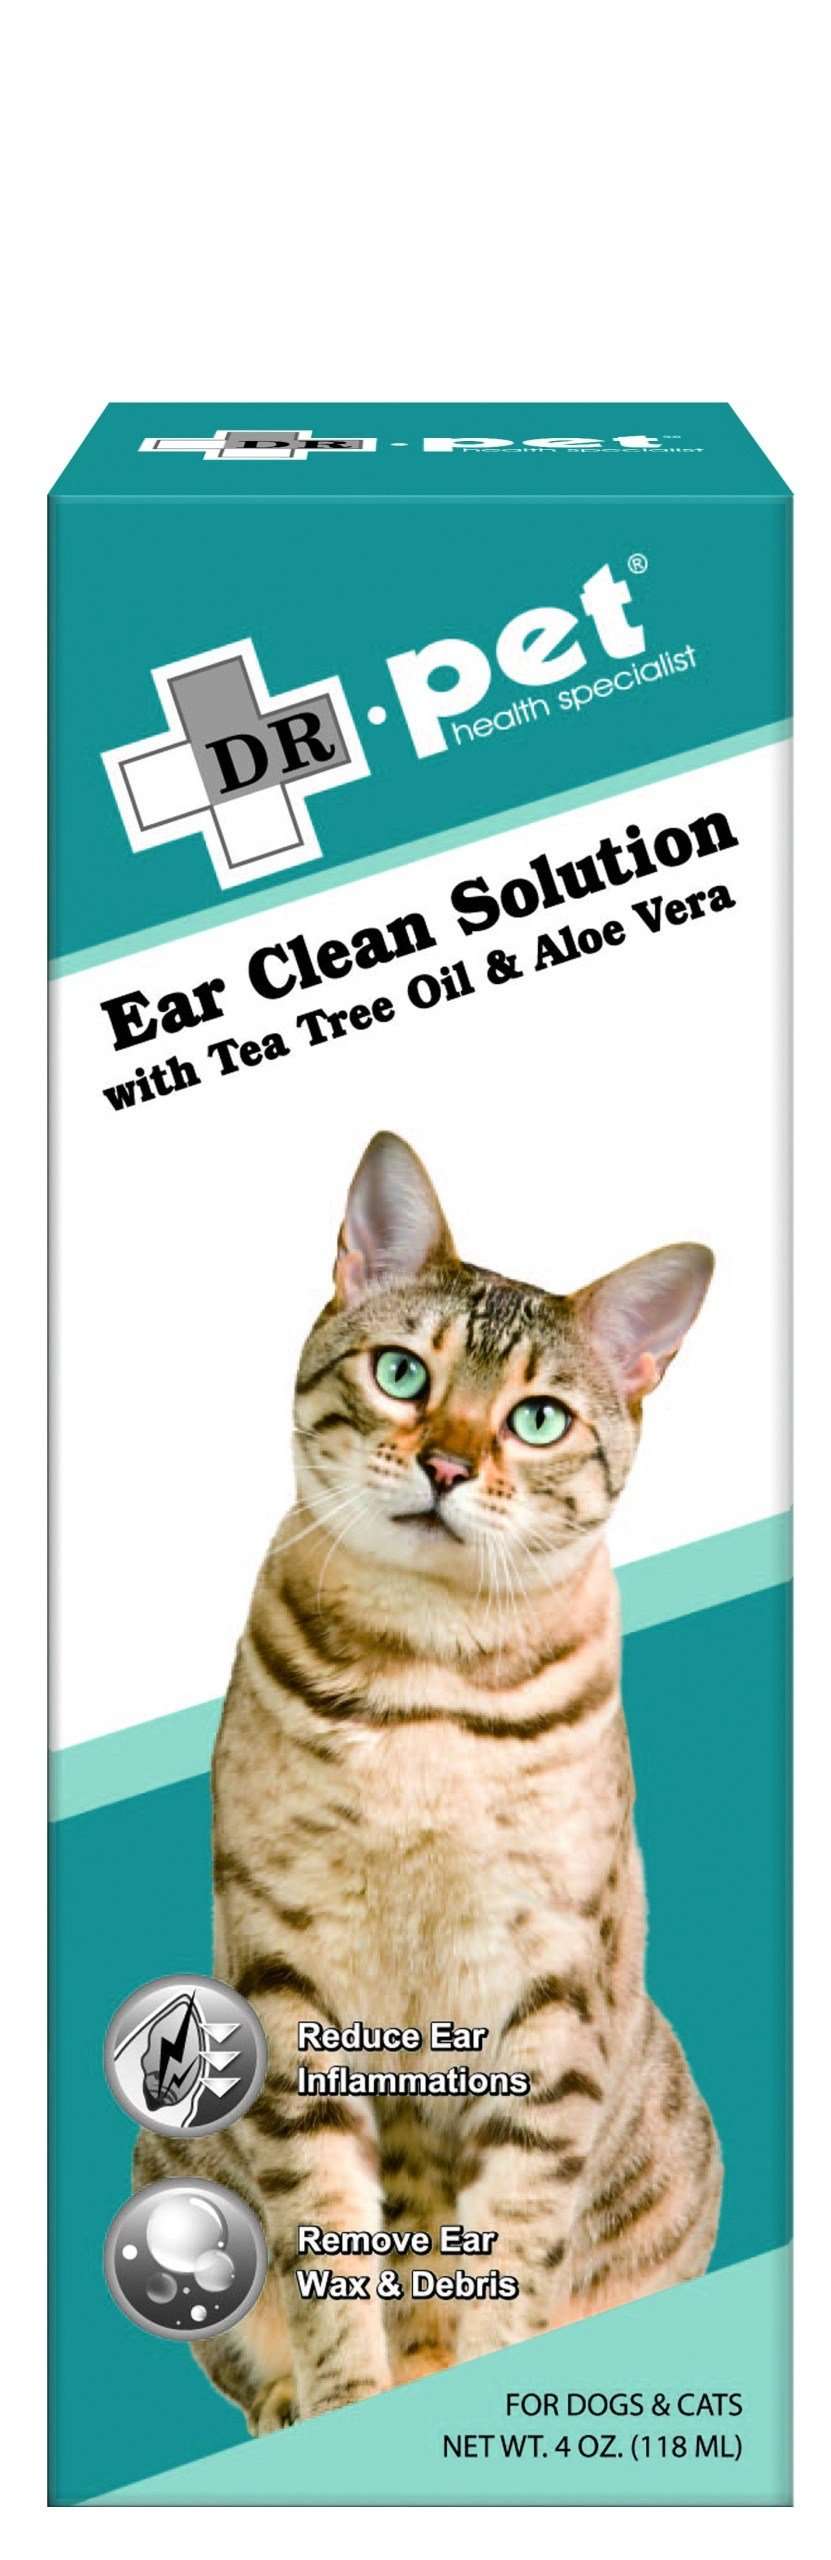 ear-clean-4oz-box_cat_2019a-1-scaled-1.jpg